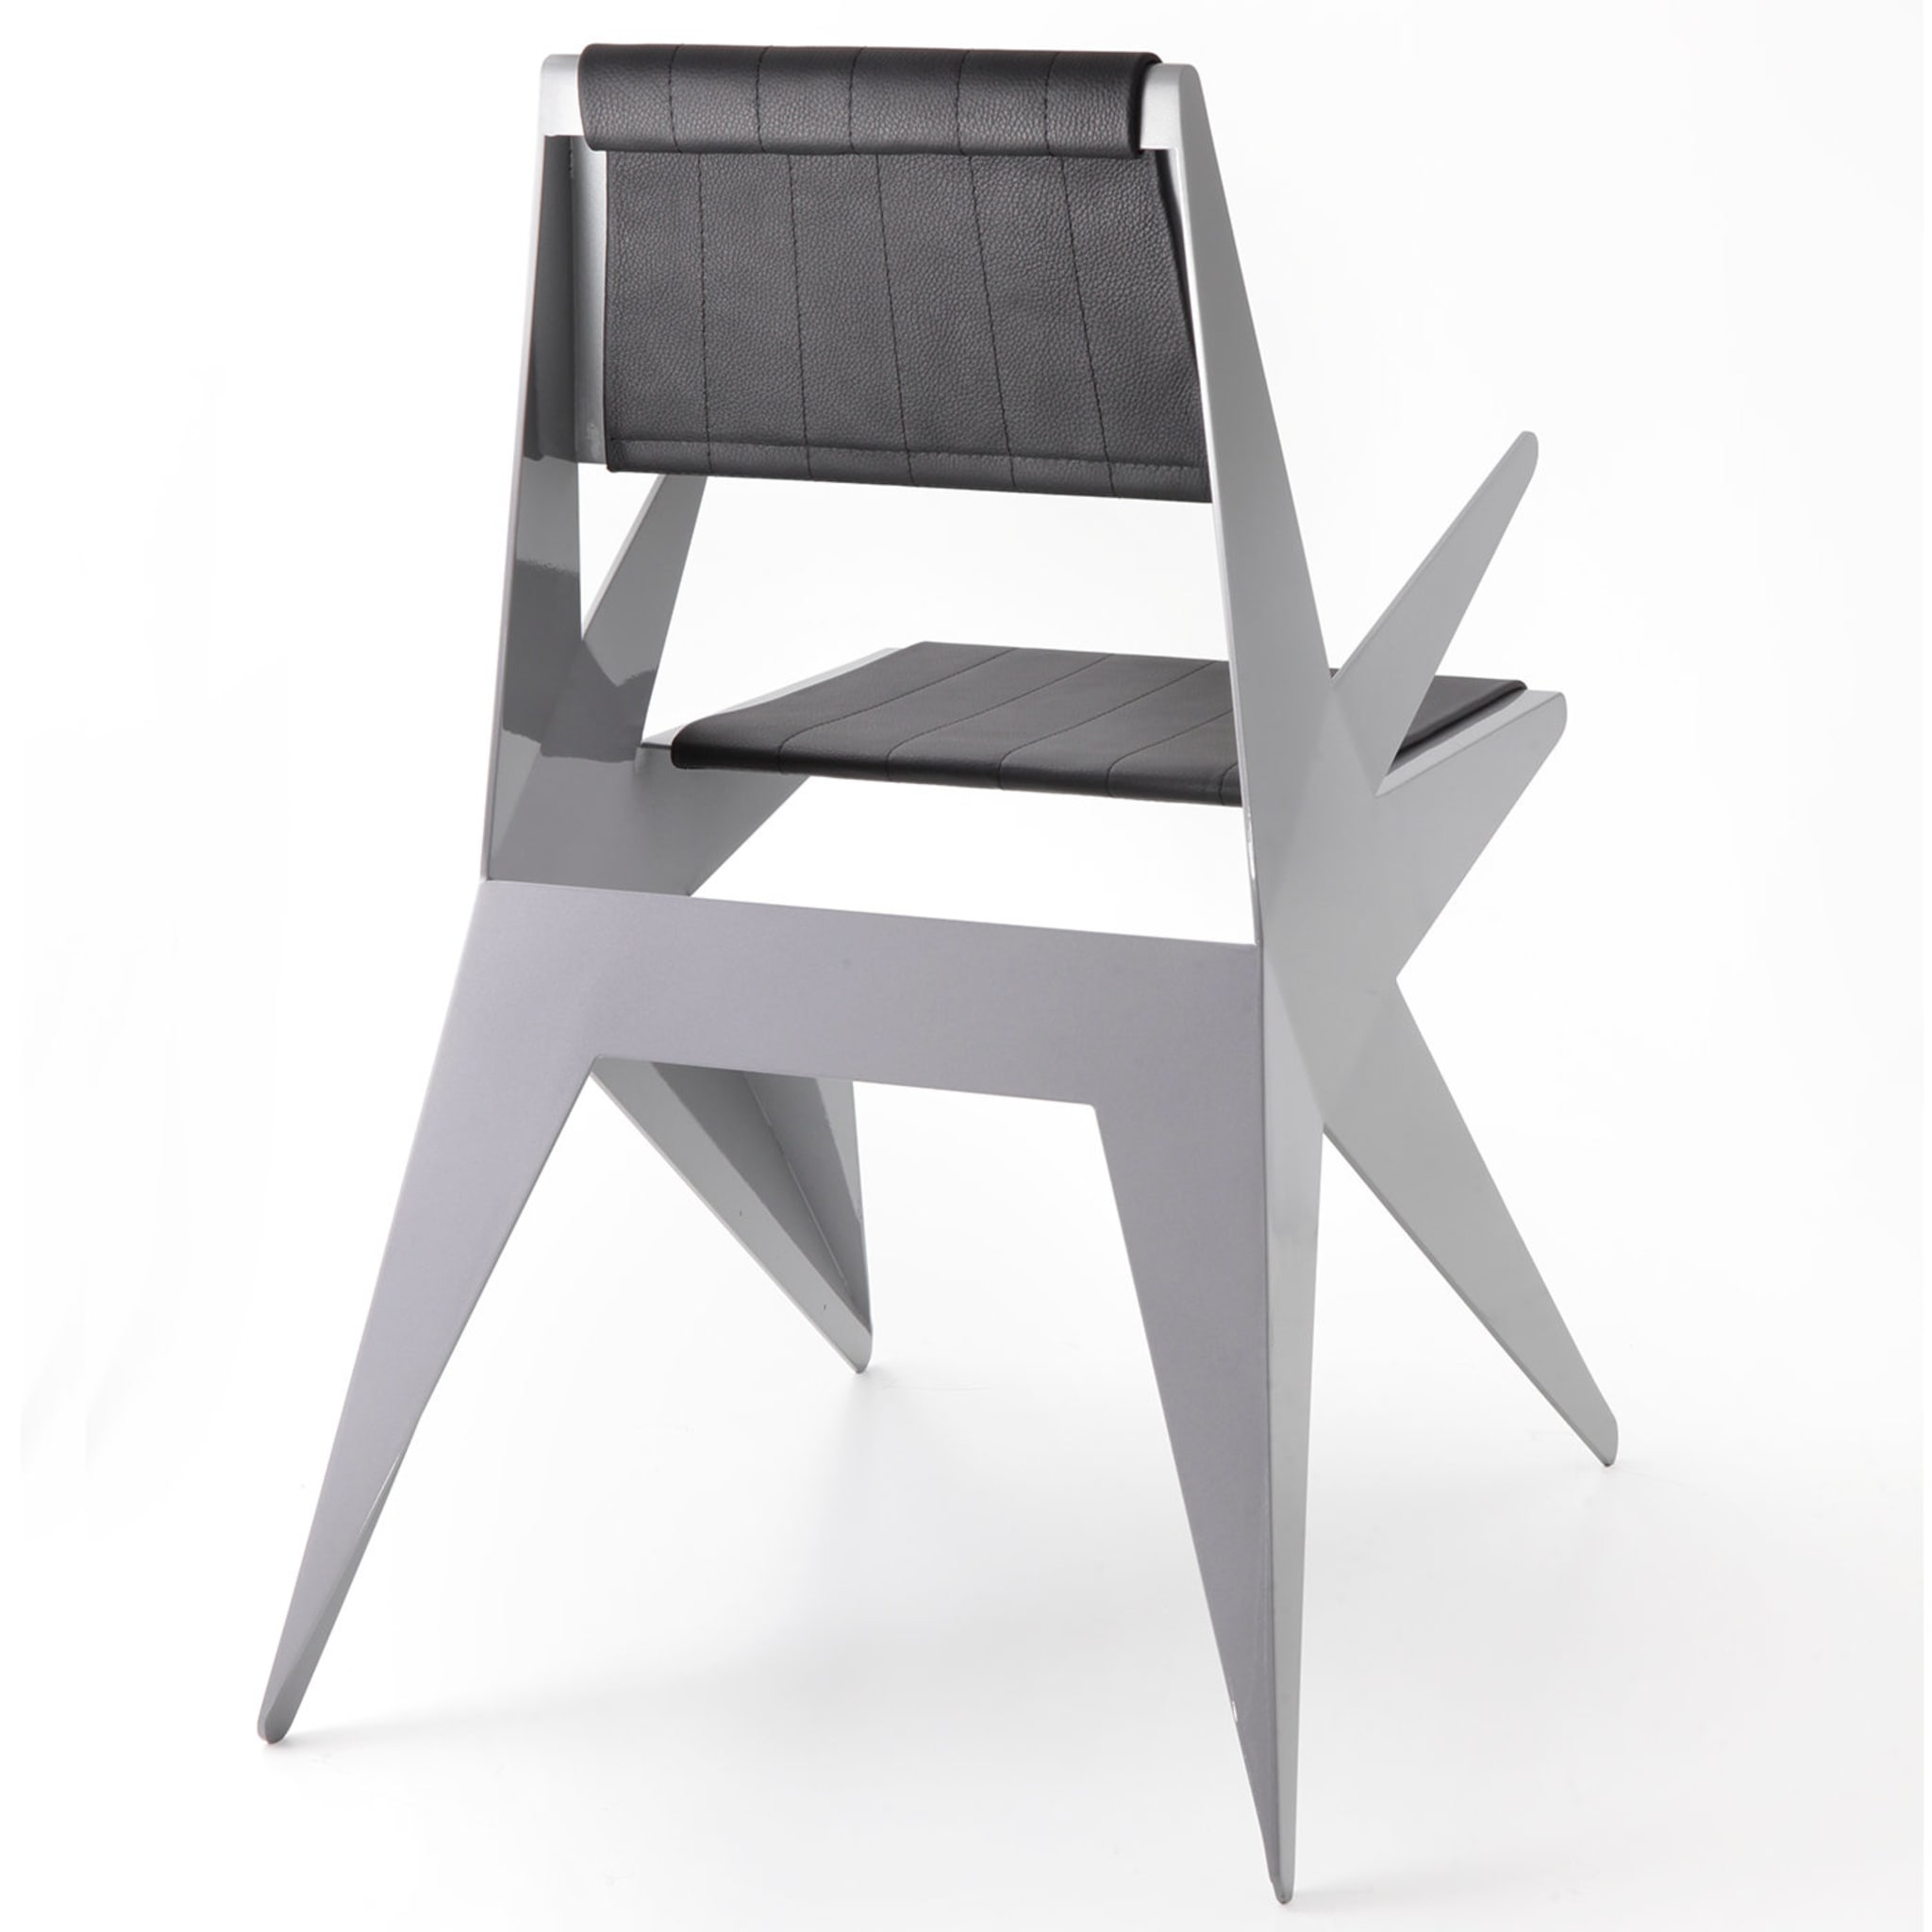 Star Black Chair with Armrests by Antonio Pio Saracino - Alternative view 1